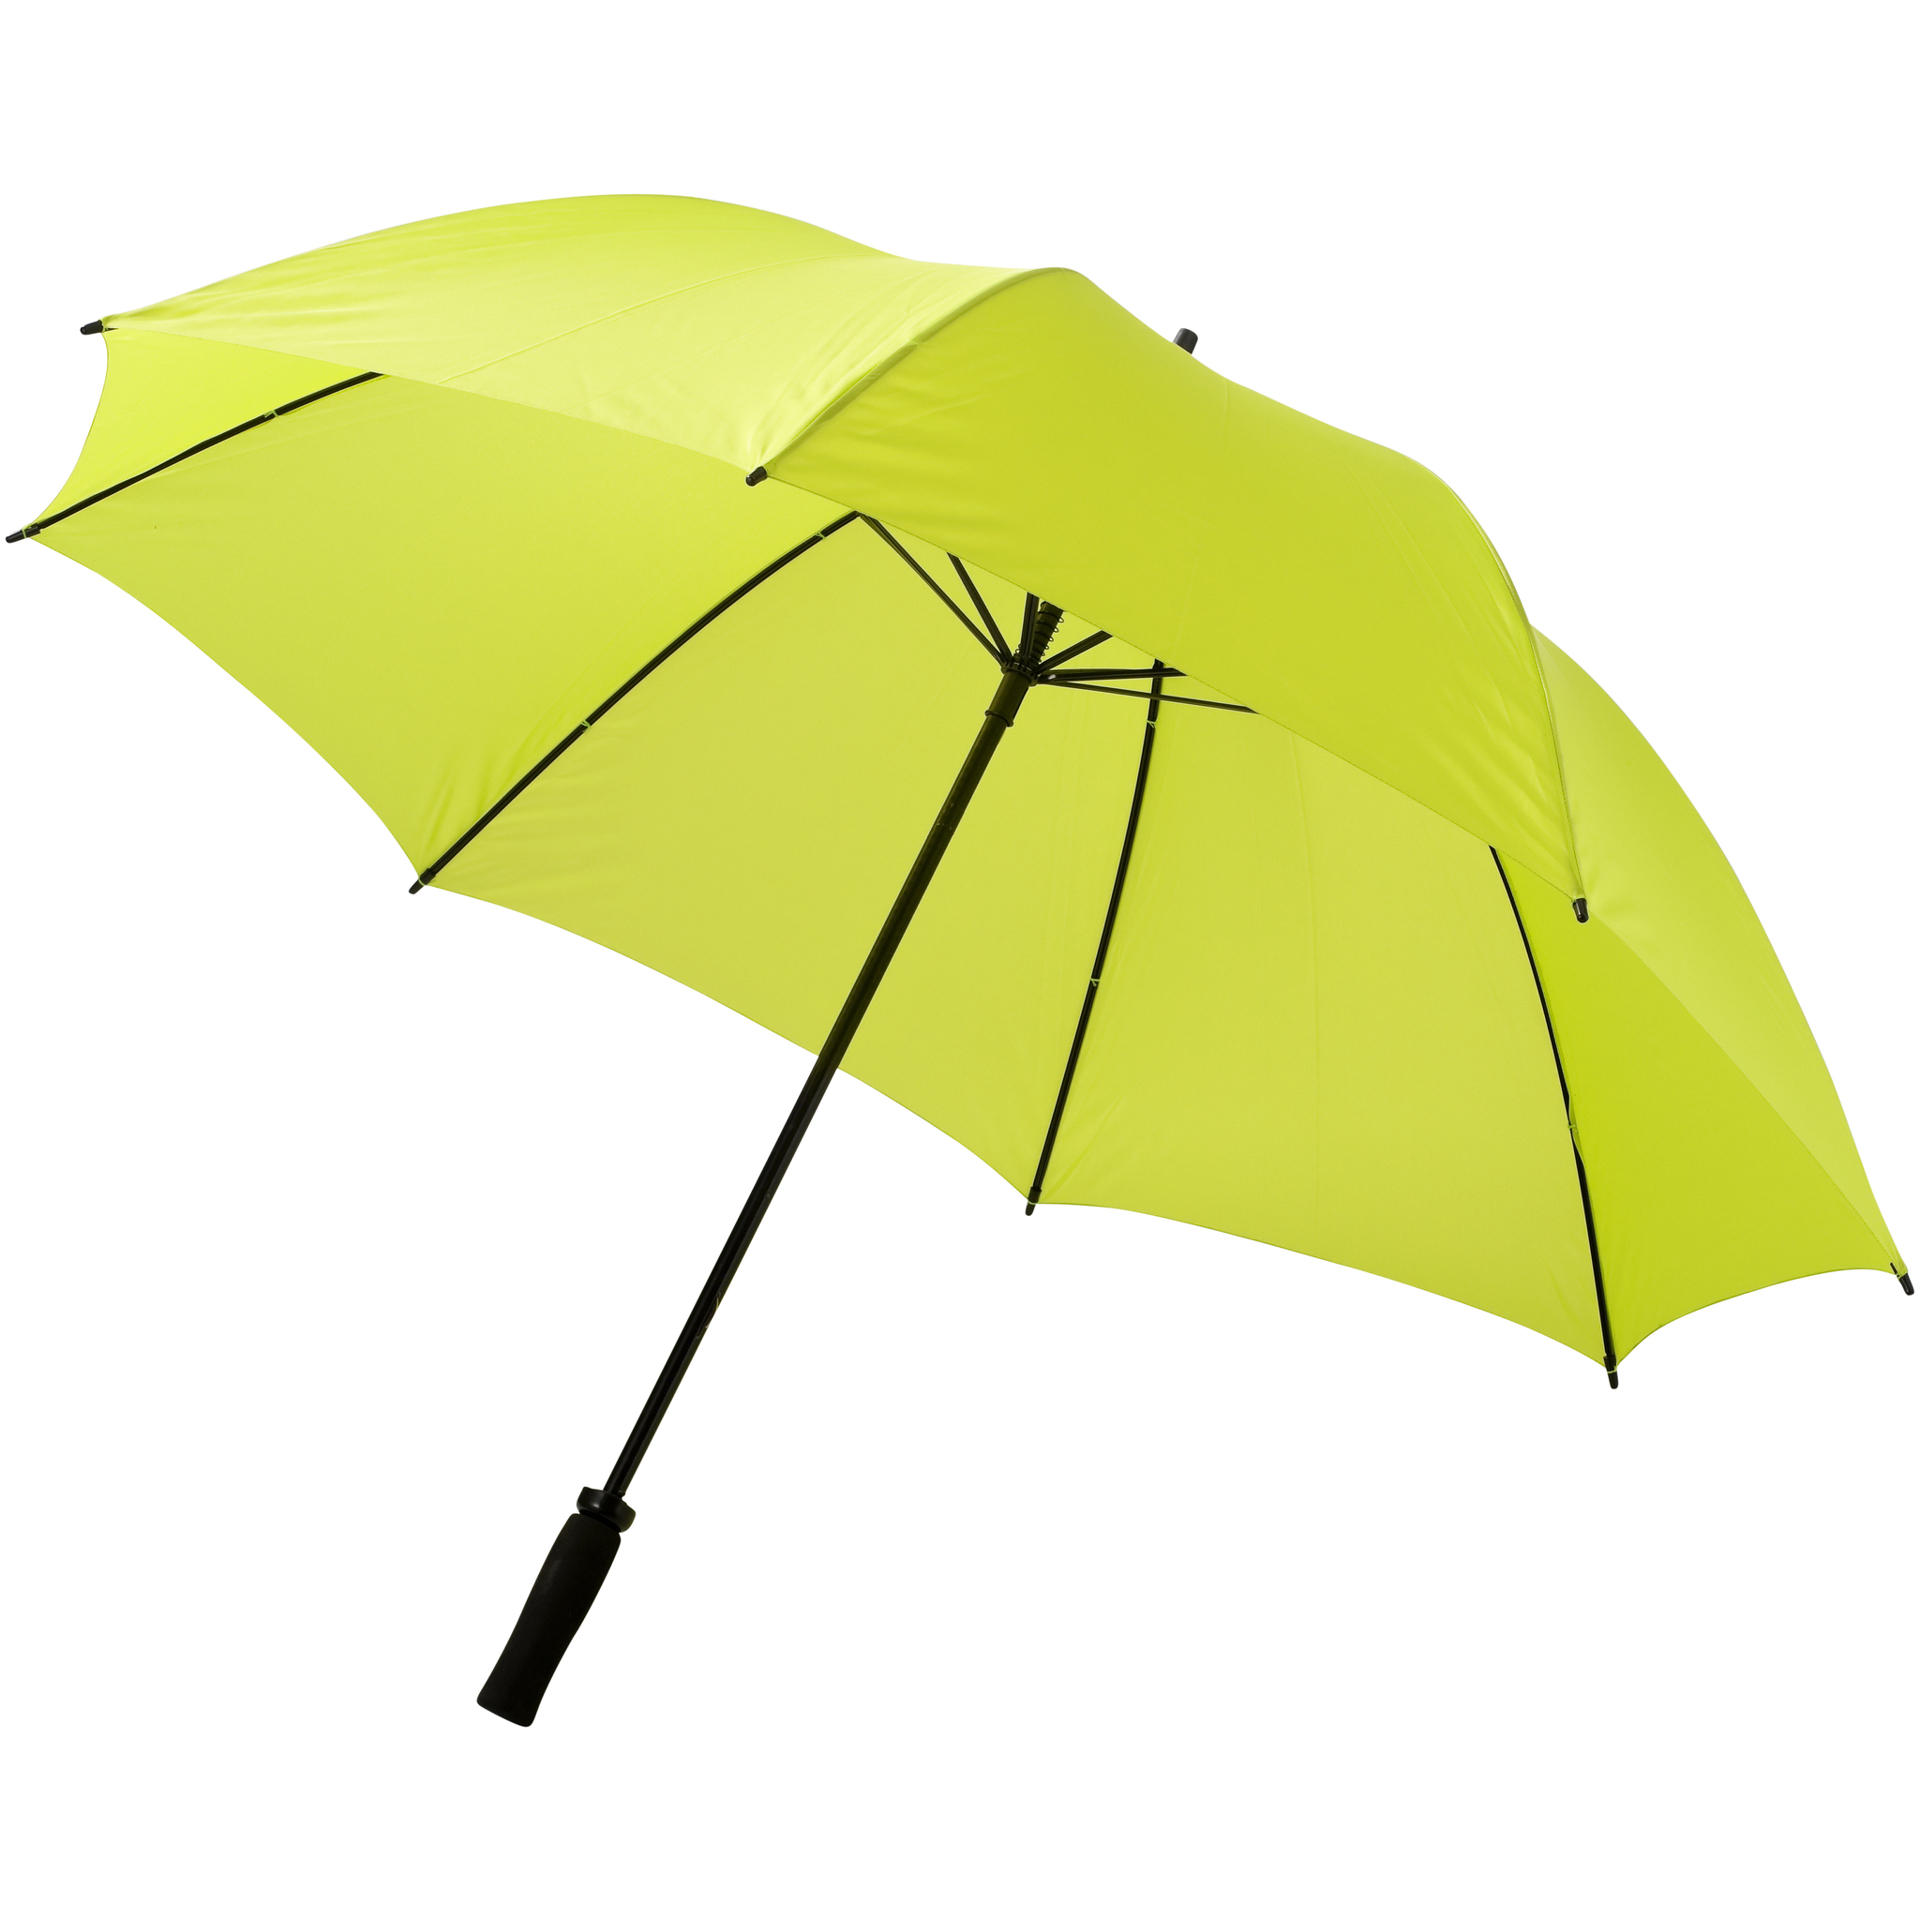 Storm Umbrella in yellow